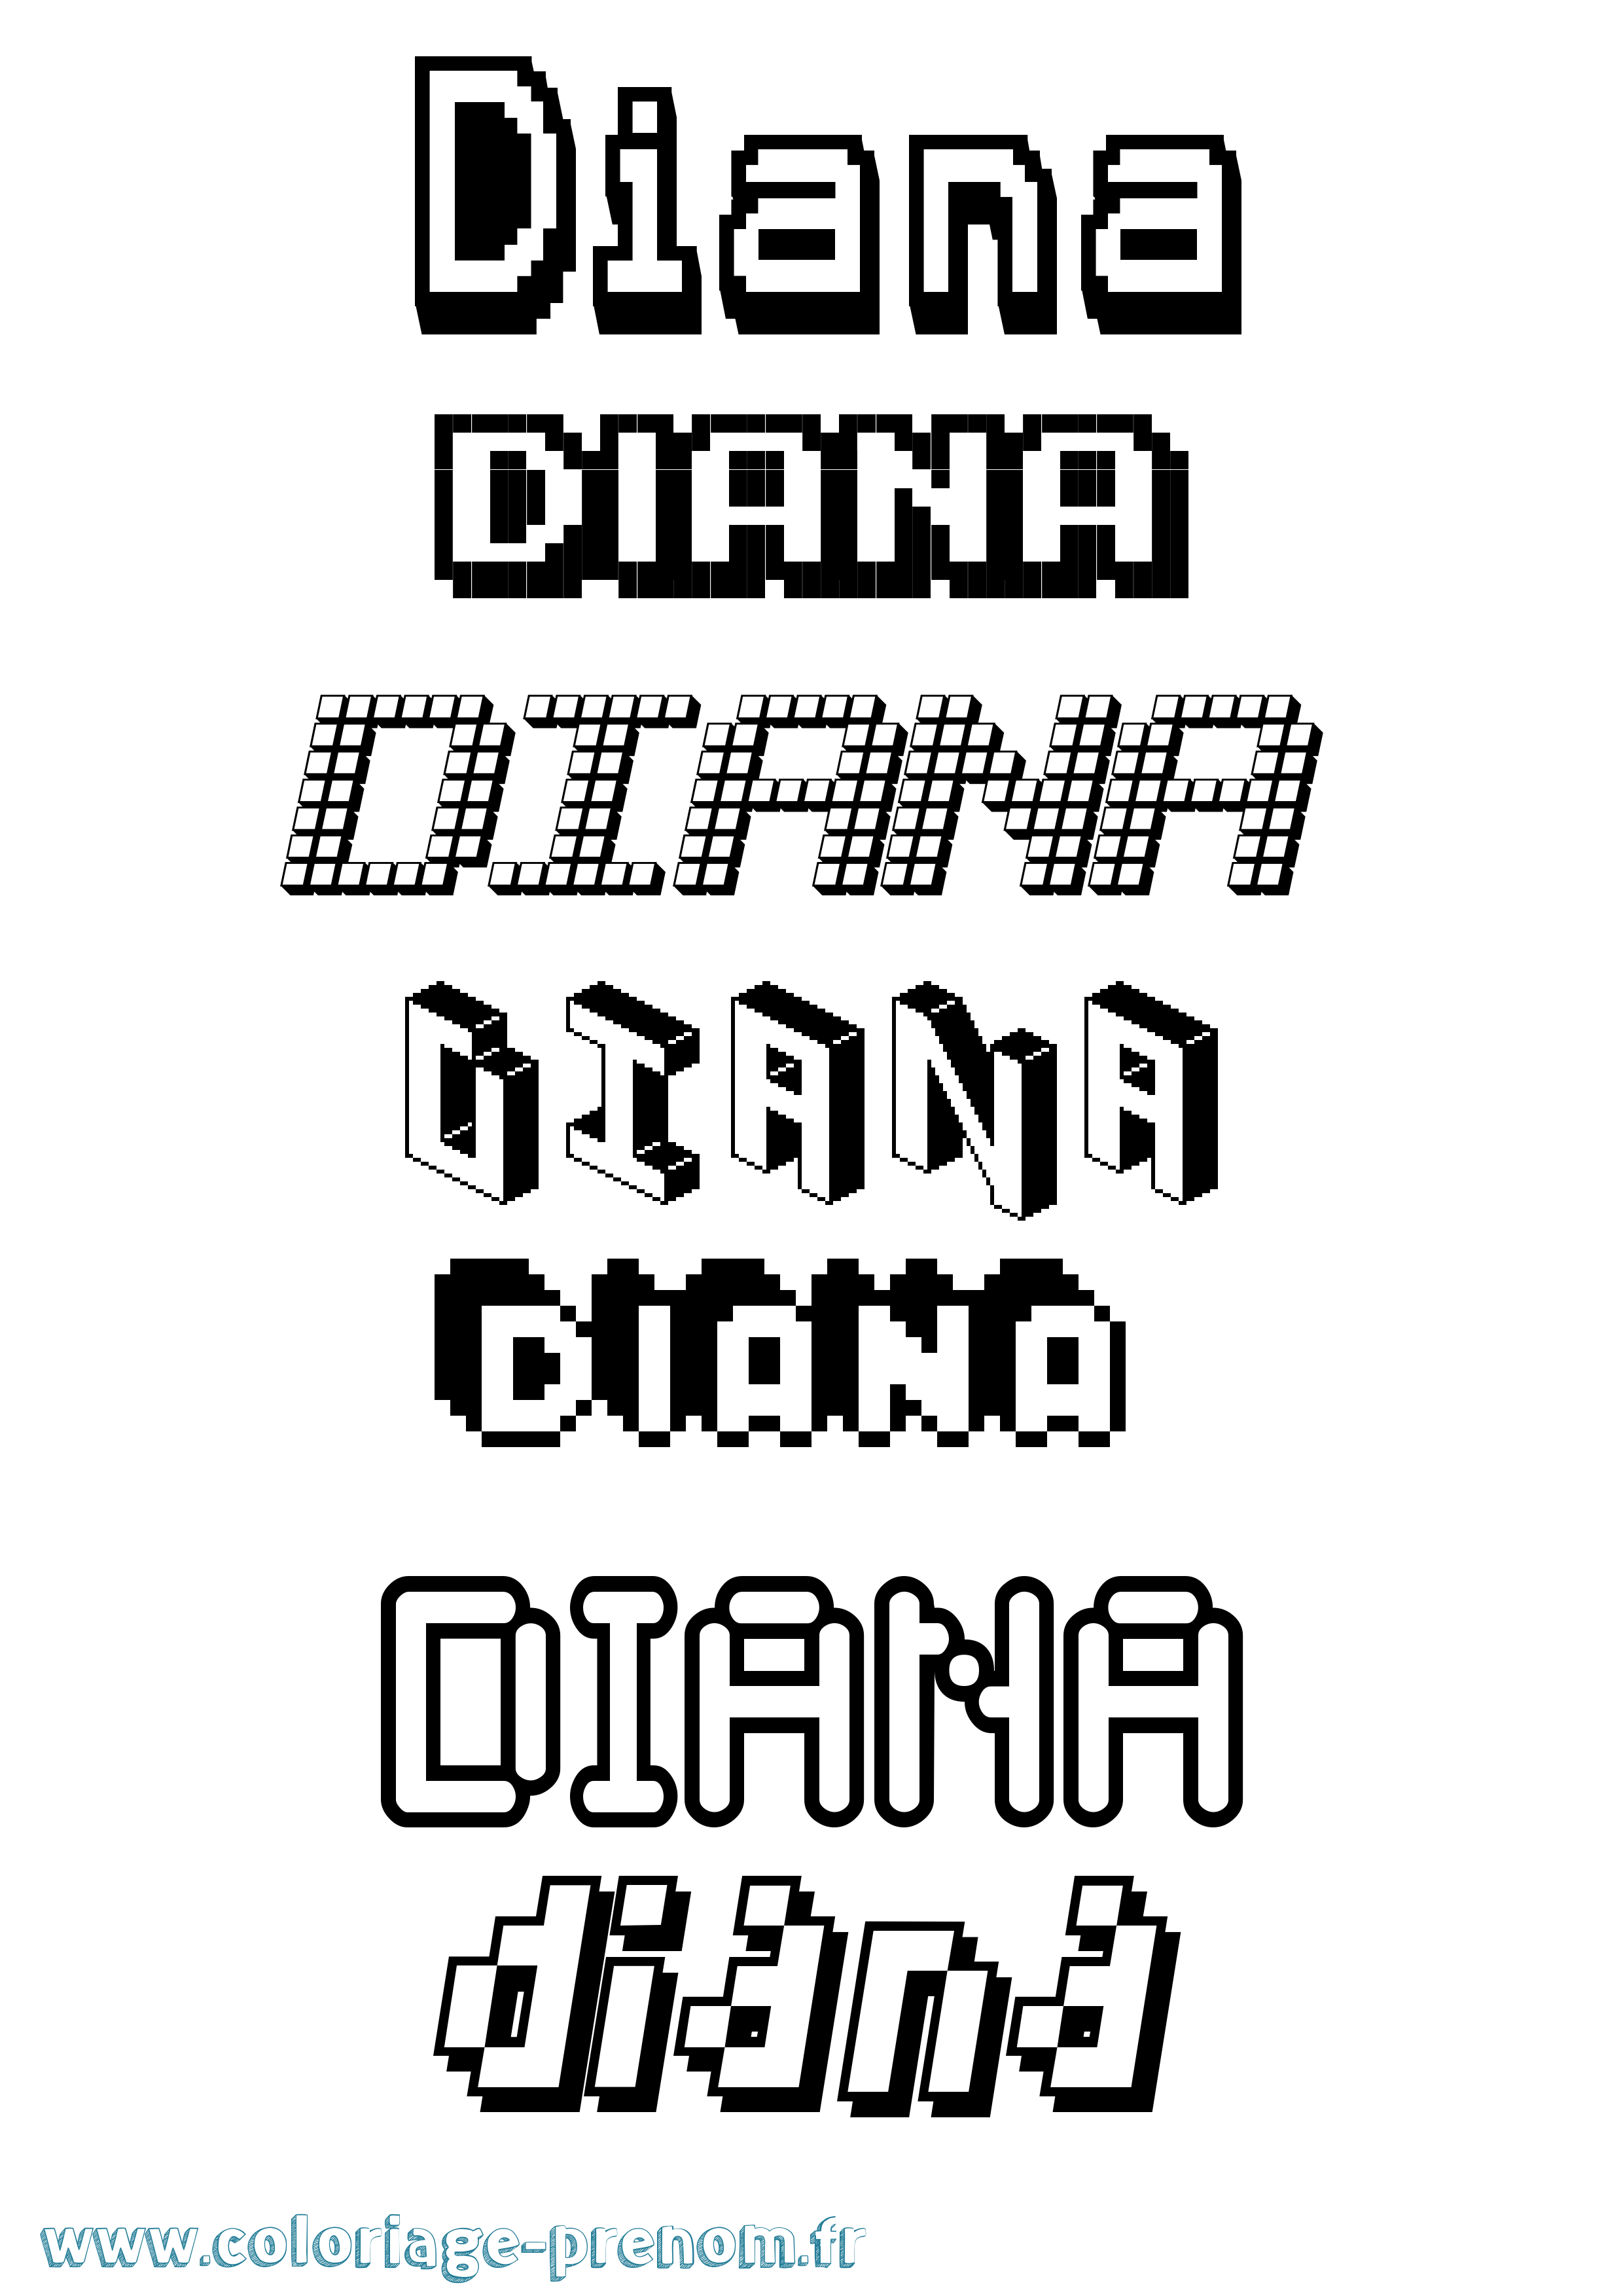 Coloriage prénom Diana Pixel